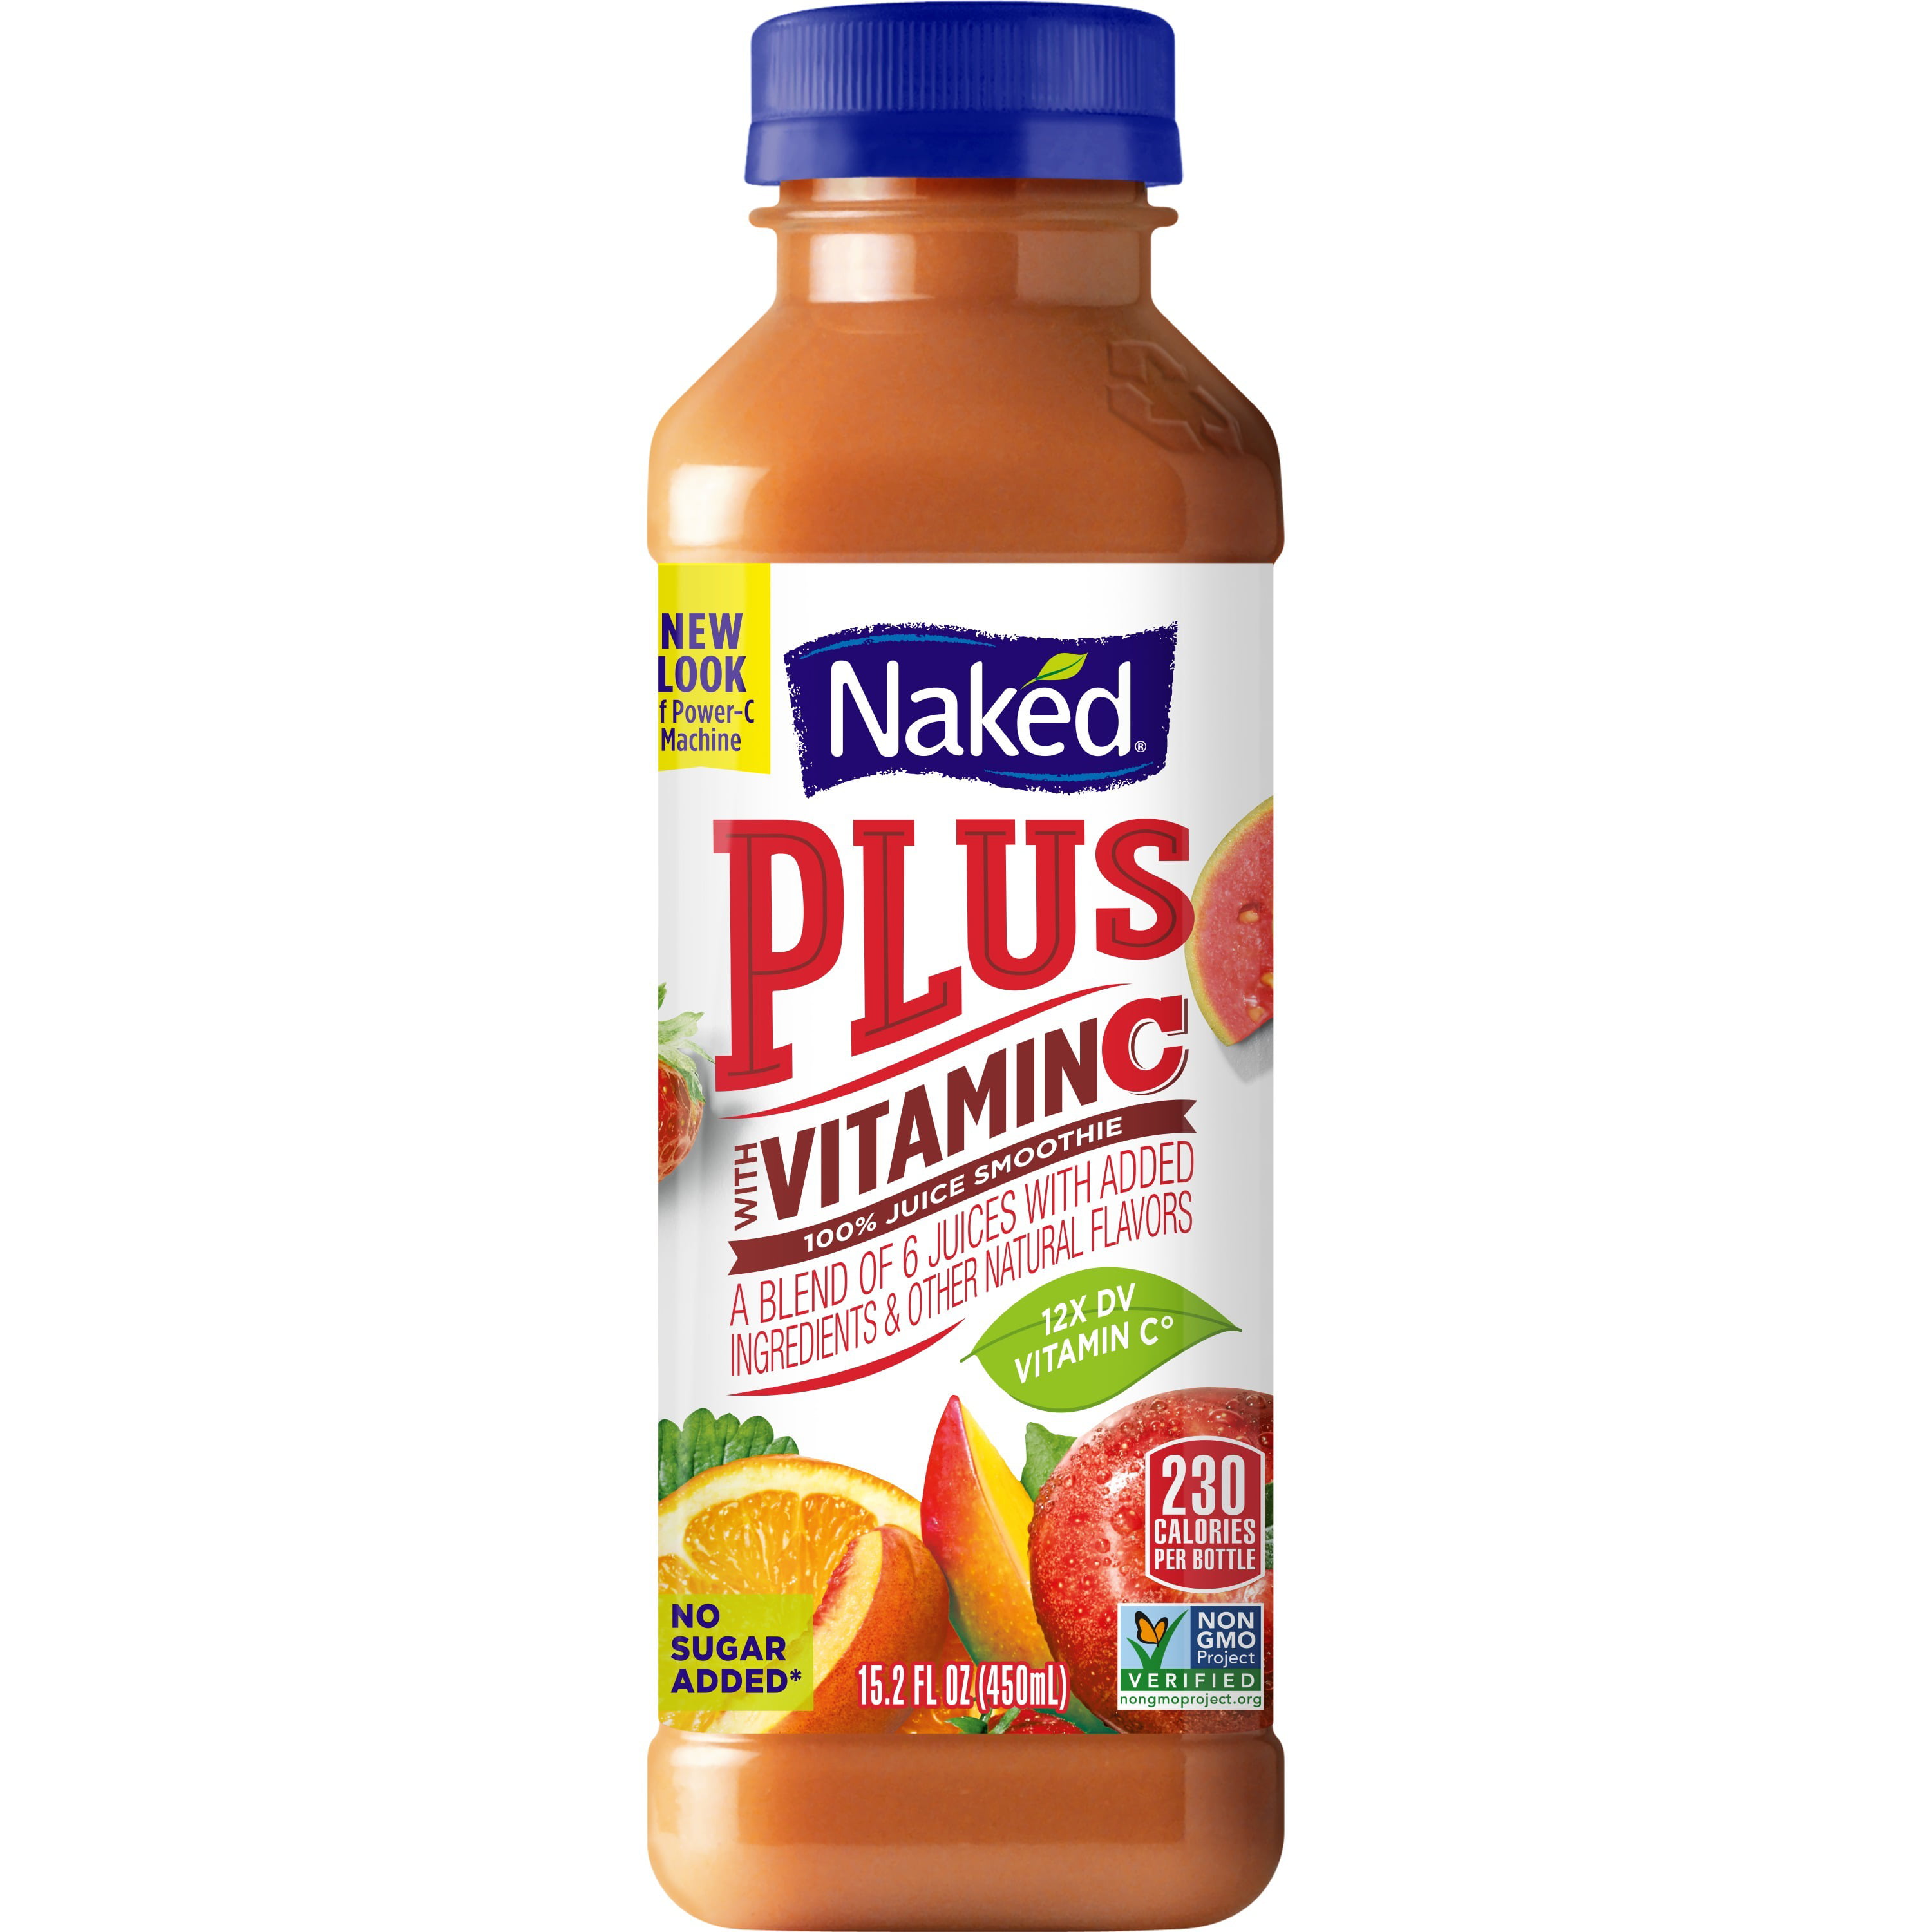 Naked Plus with Vitamin C Juice Smoothie | Hy-Vee Aisles 